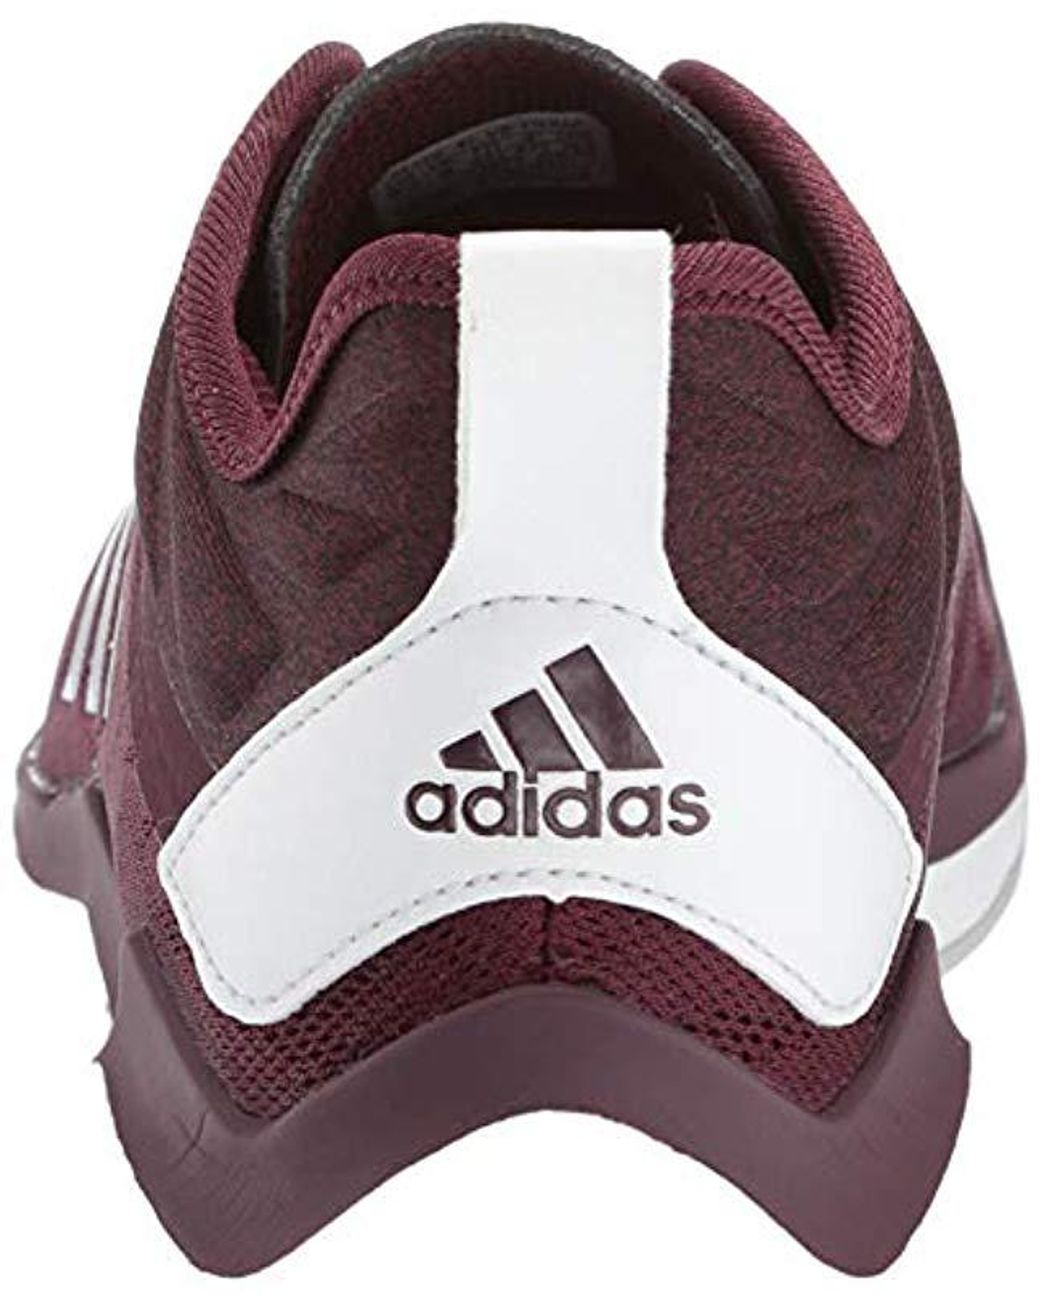 adidas originals men's speed trainer 4 baseball shoe